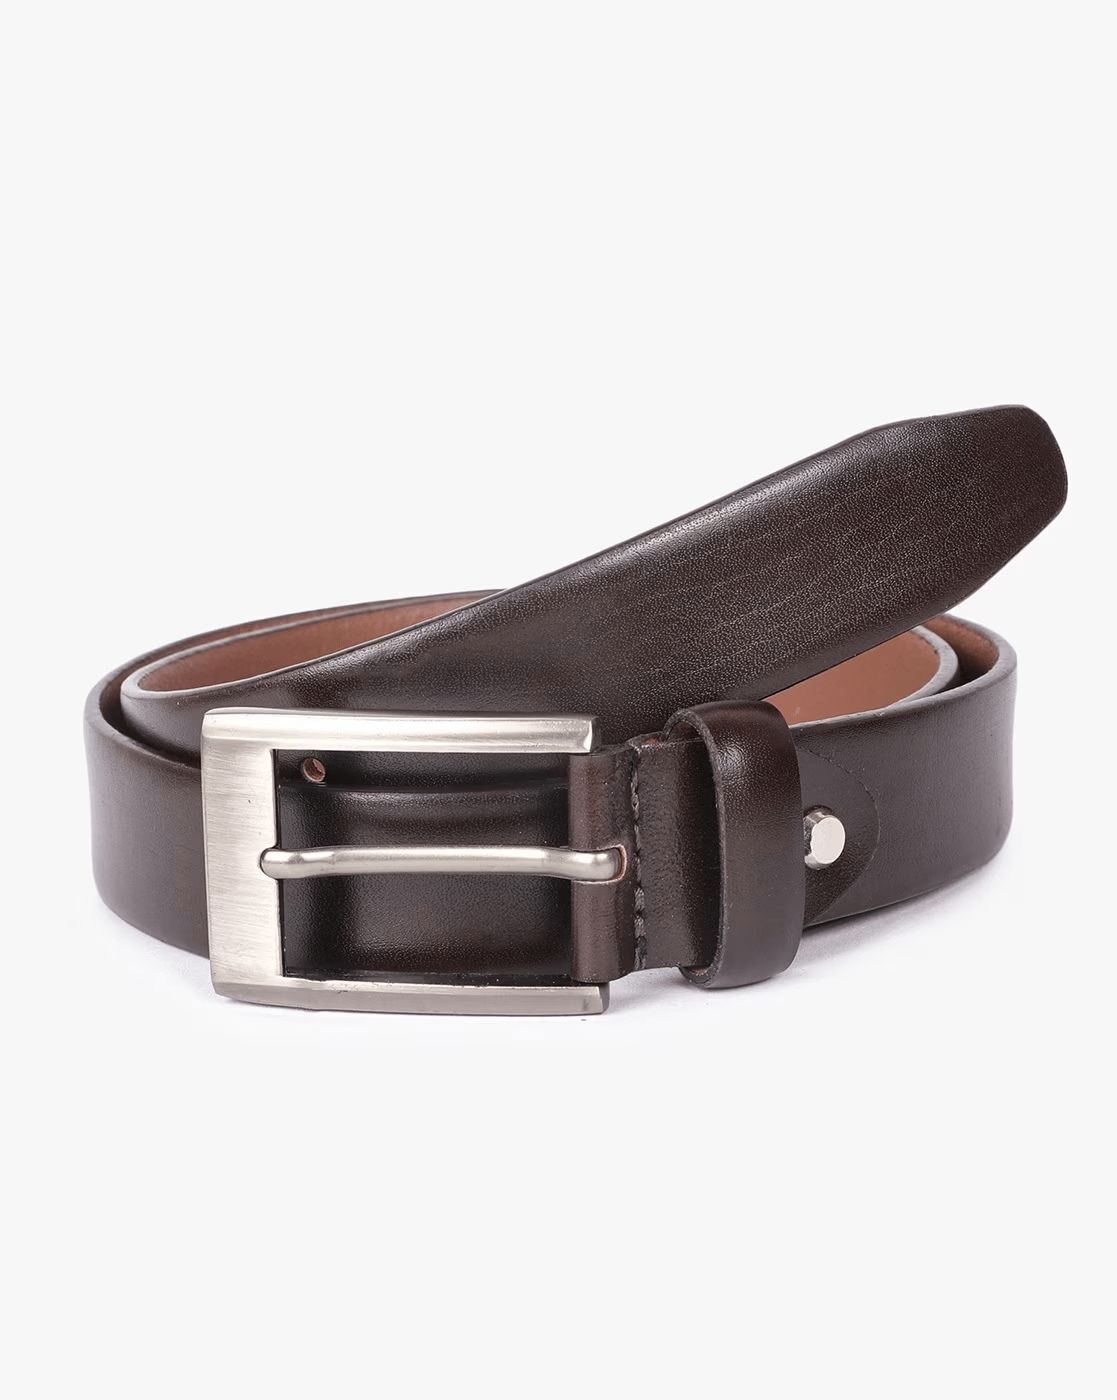 dujjo-category-leather-belt